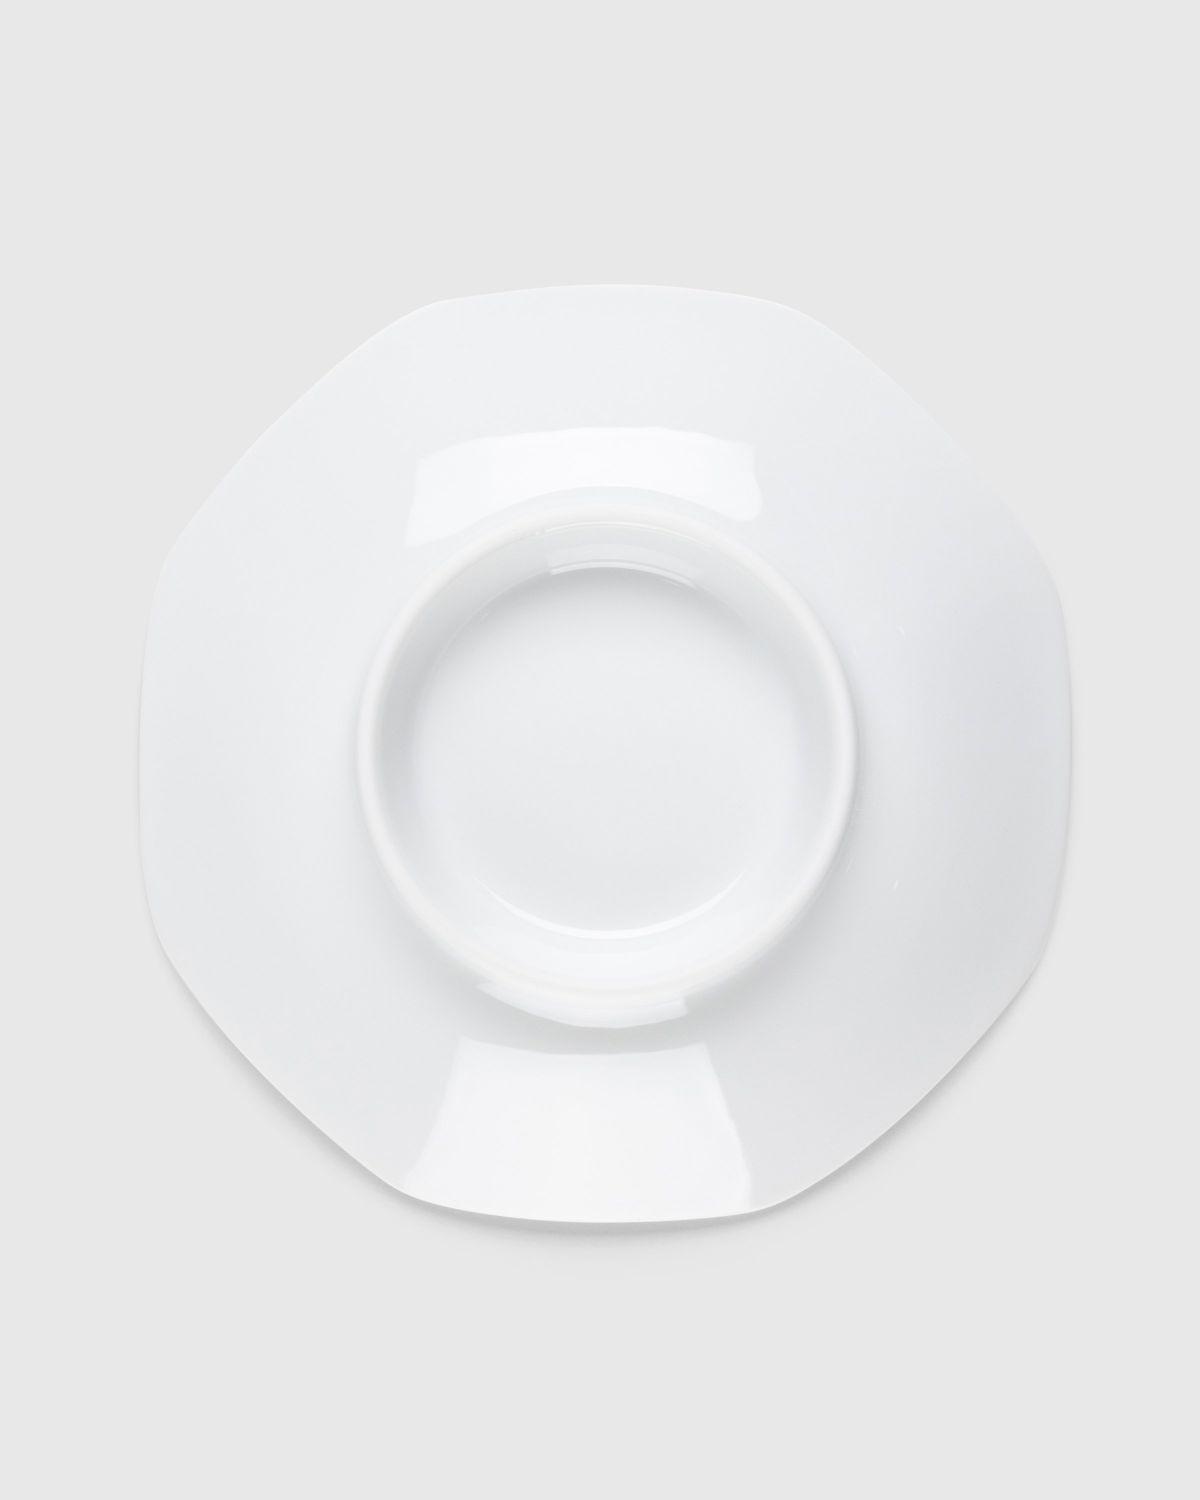 Medicom – Space Invaders Charhan Dish Multi - Ceramics - Multi - Image 3